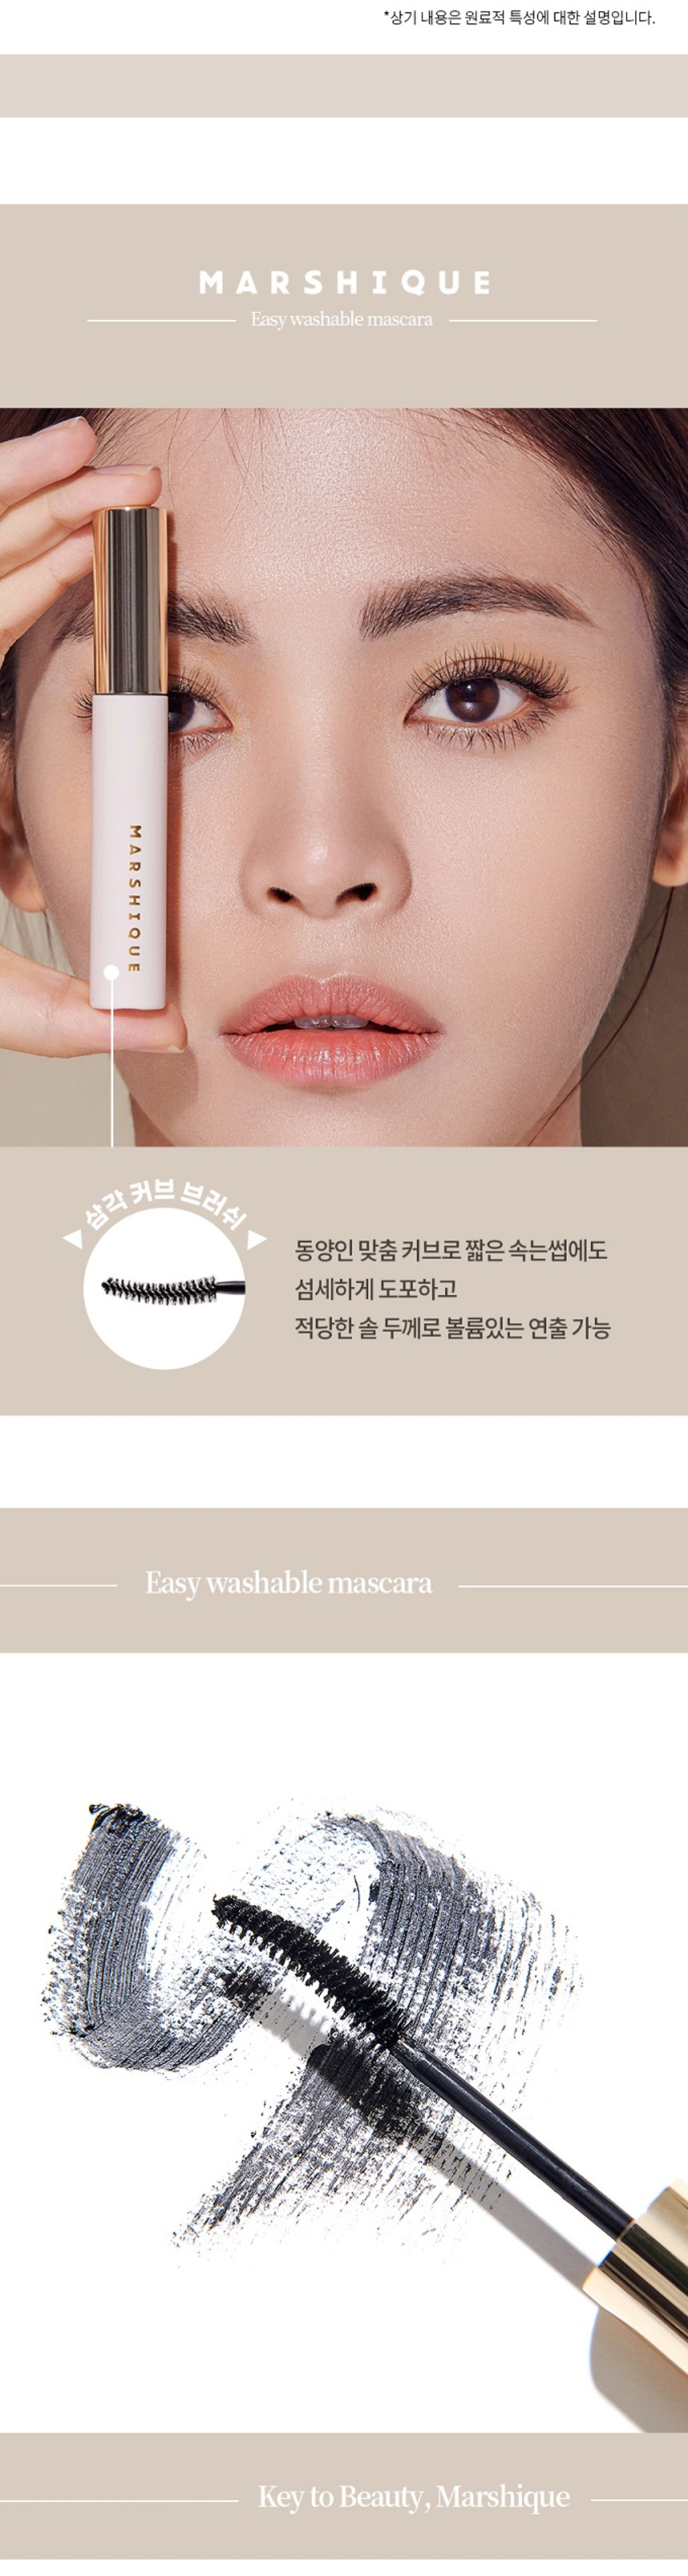 cosmetics product image-S52L7